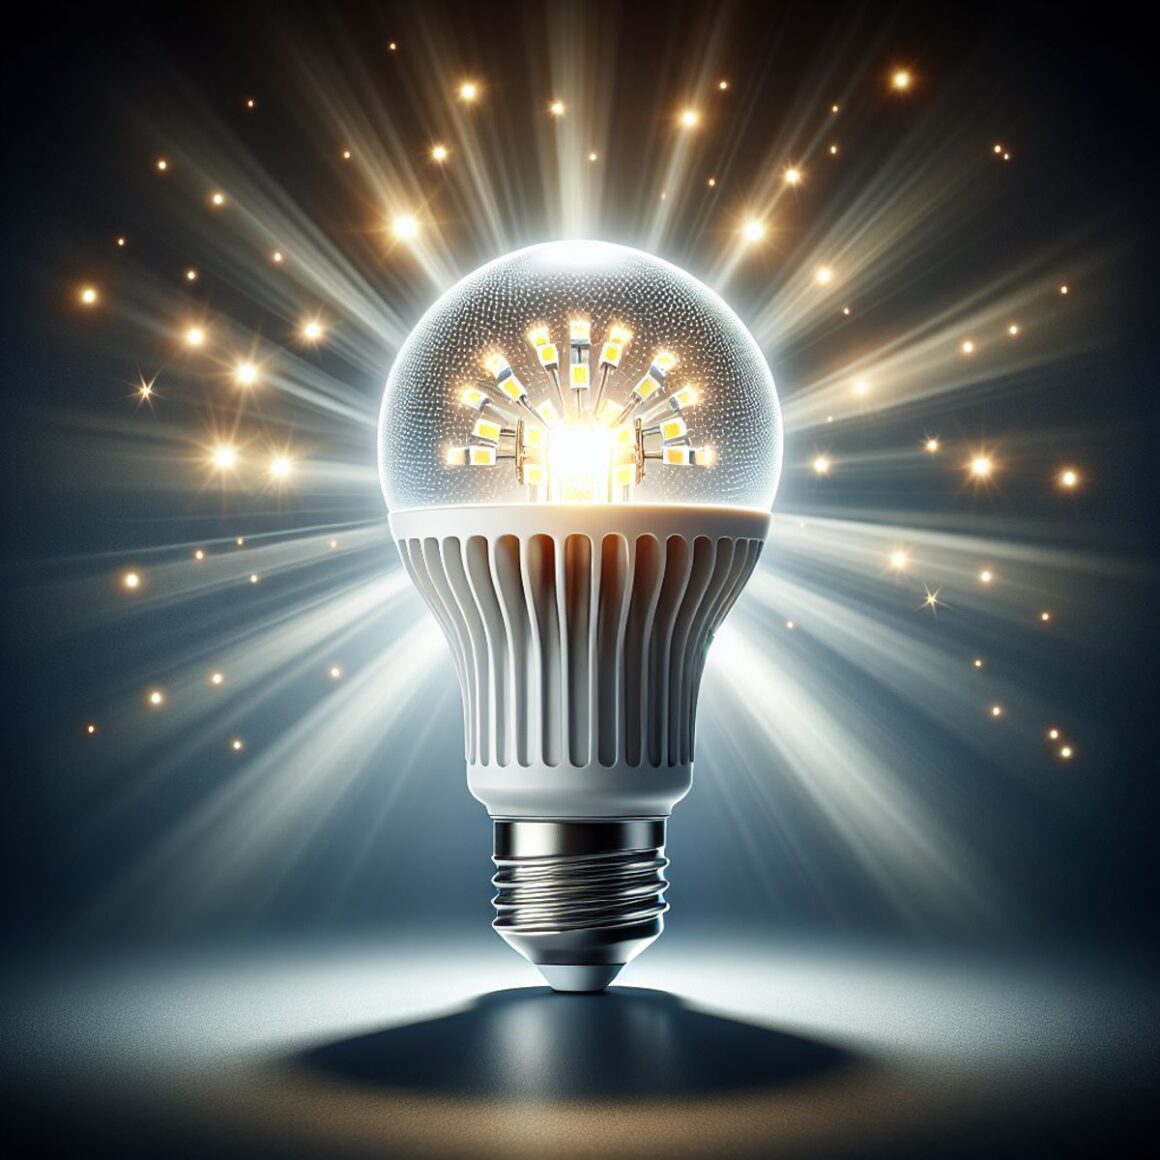 A bright LED light bulb illuminating a modern room with energy-efficient light